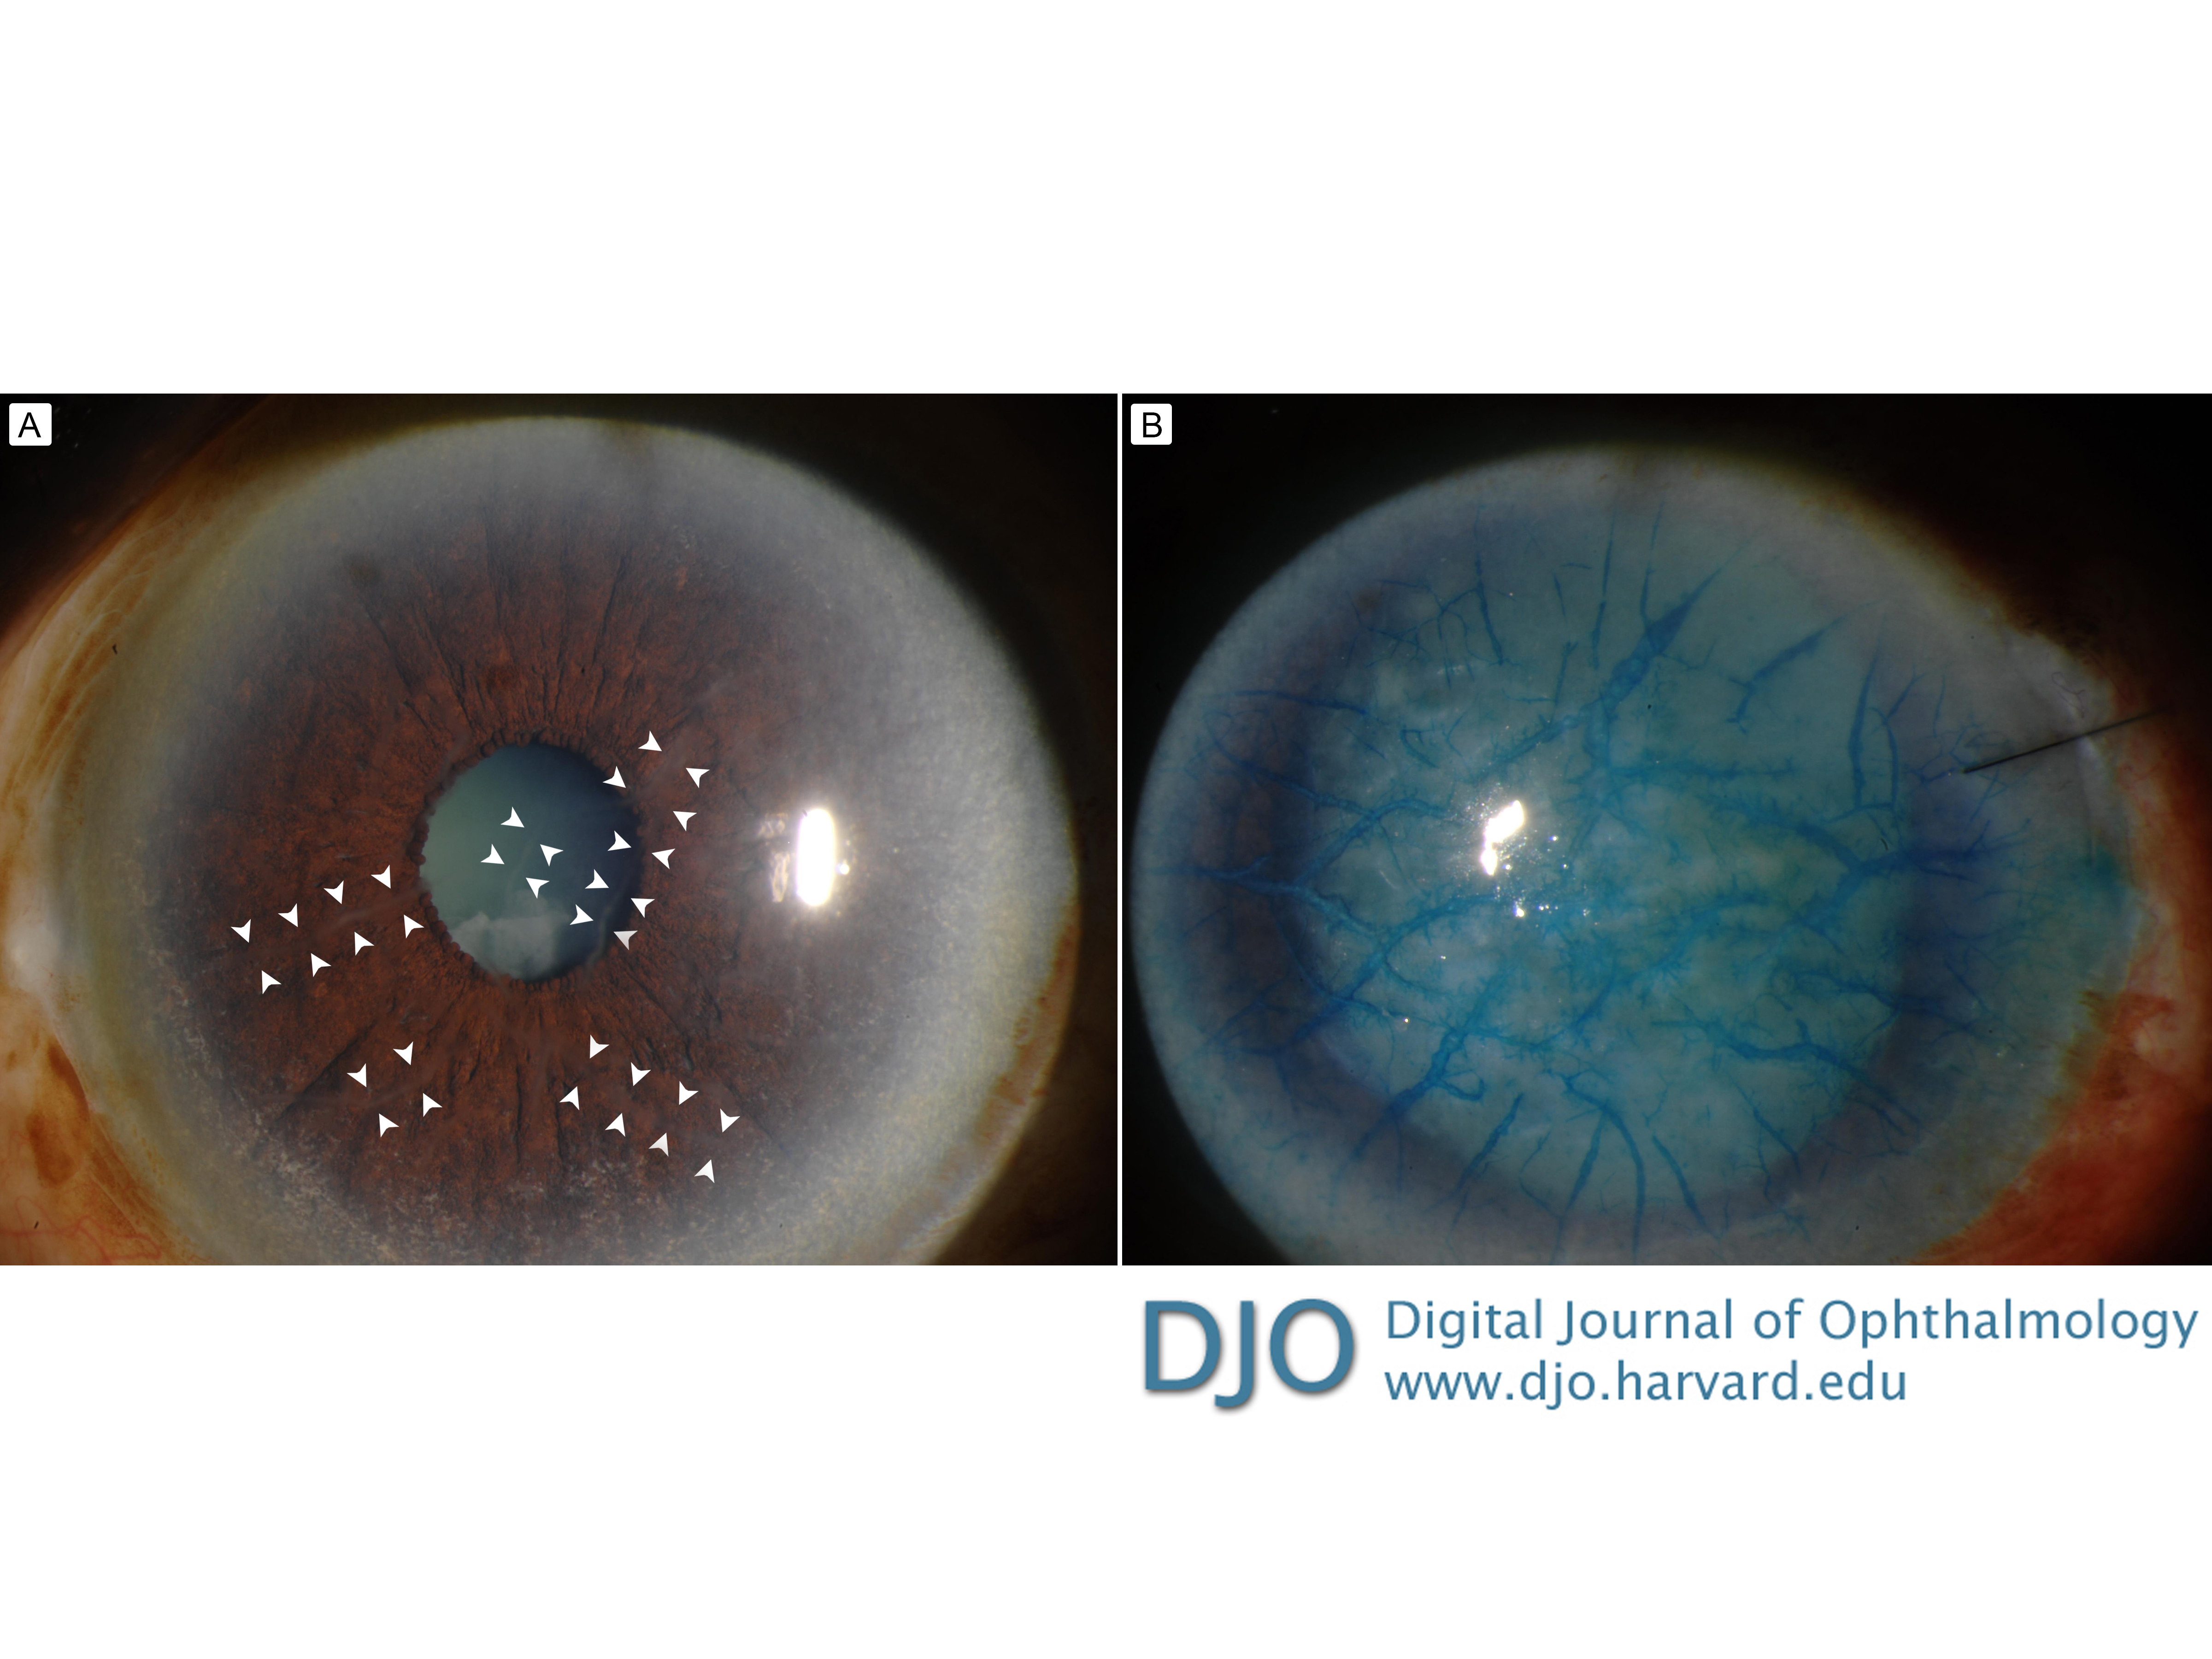 Lattice corneal dystrophy